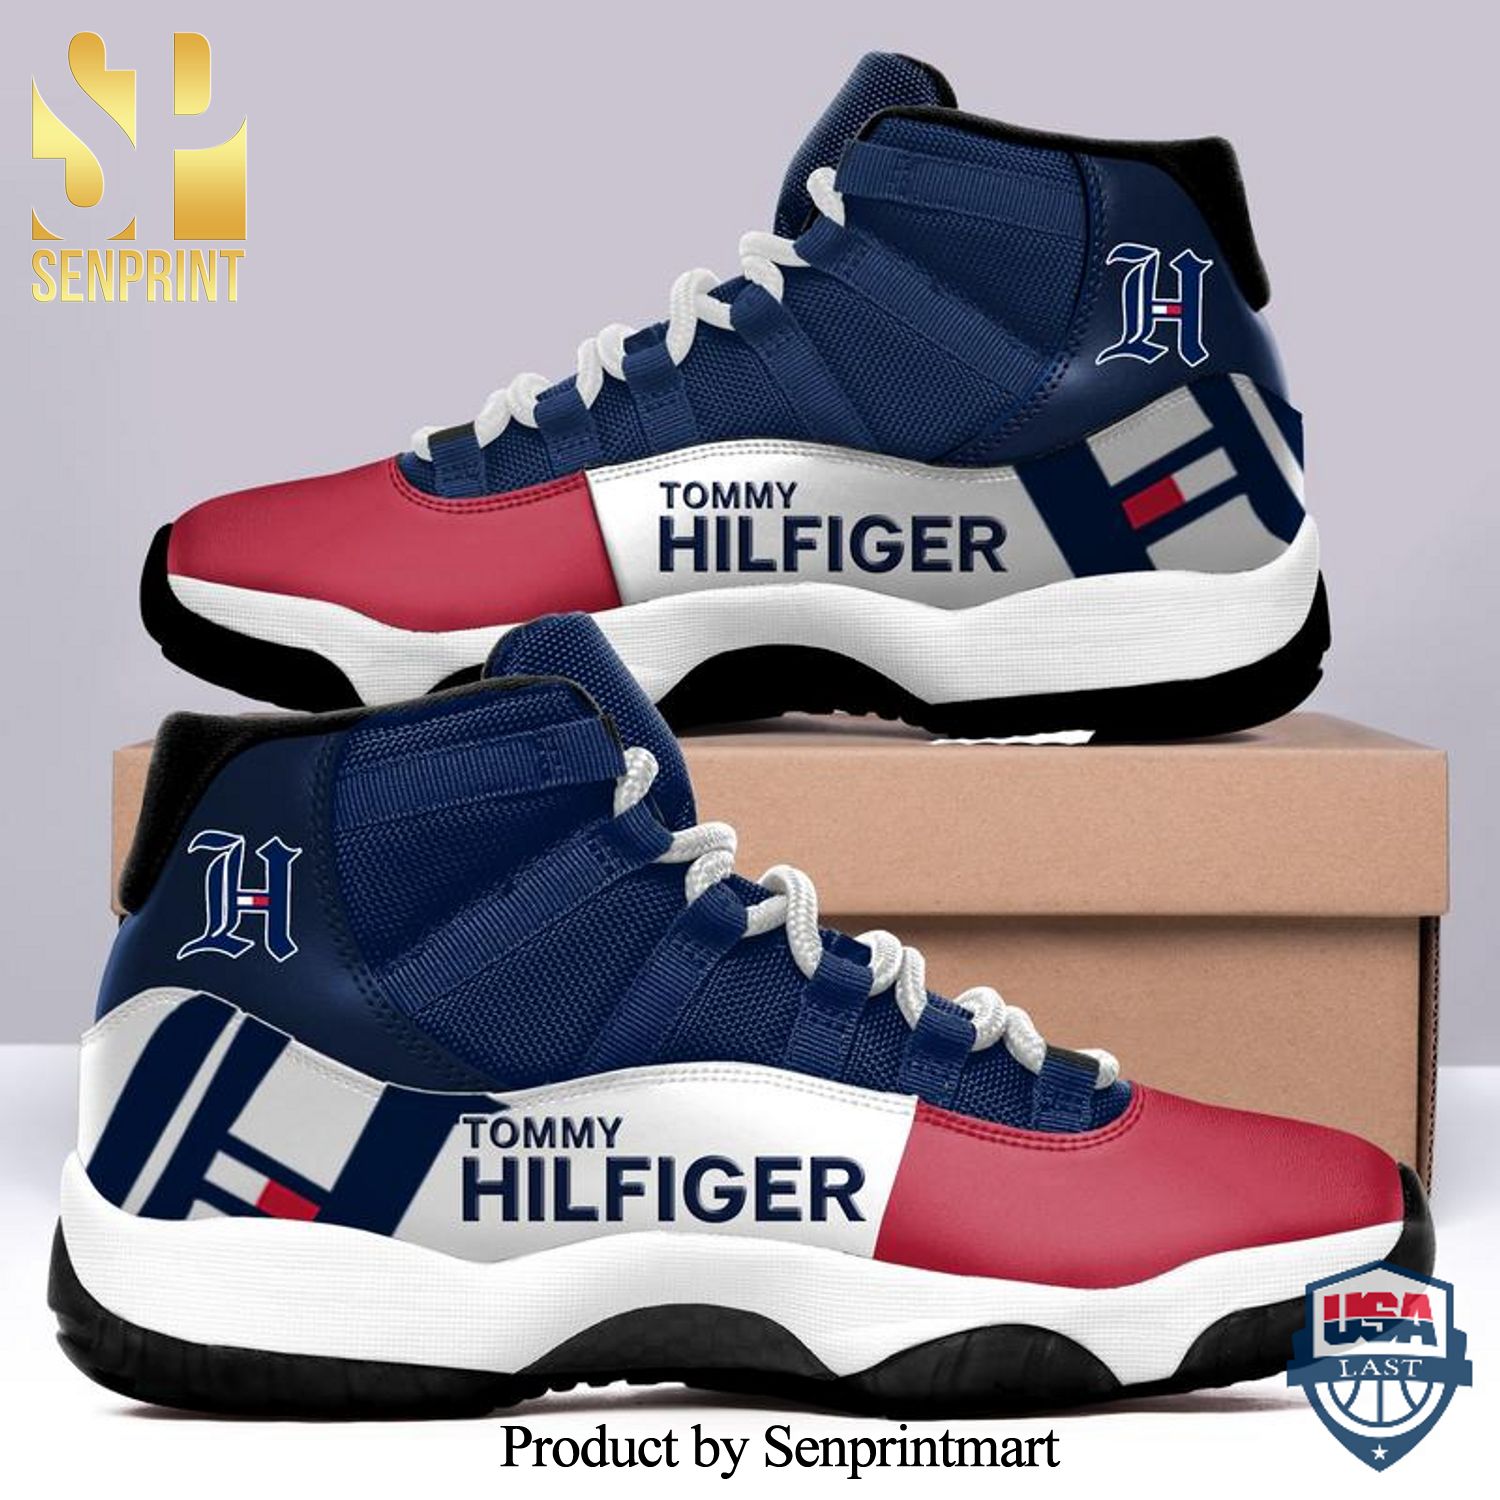 Tommy hilfiger white red sneaker High Fashion Full Printing Air Jordan 11